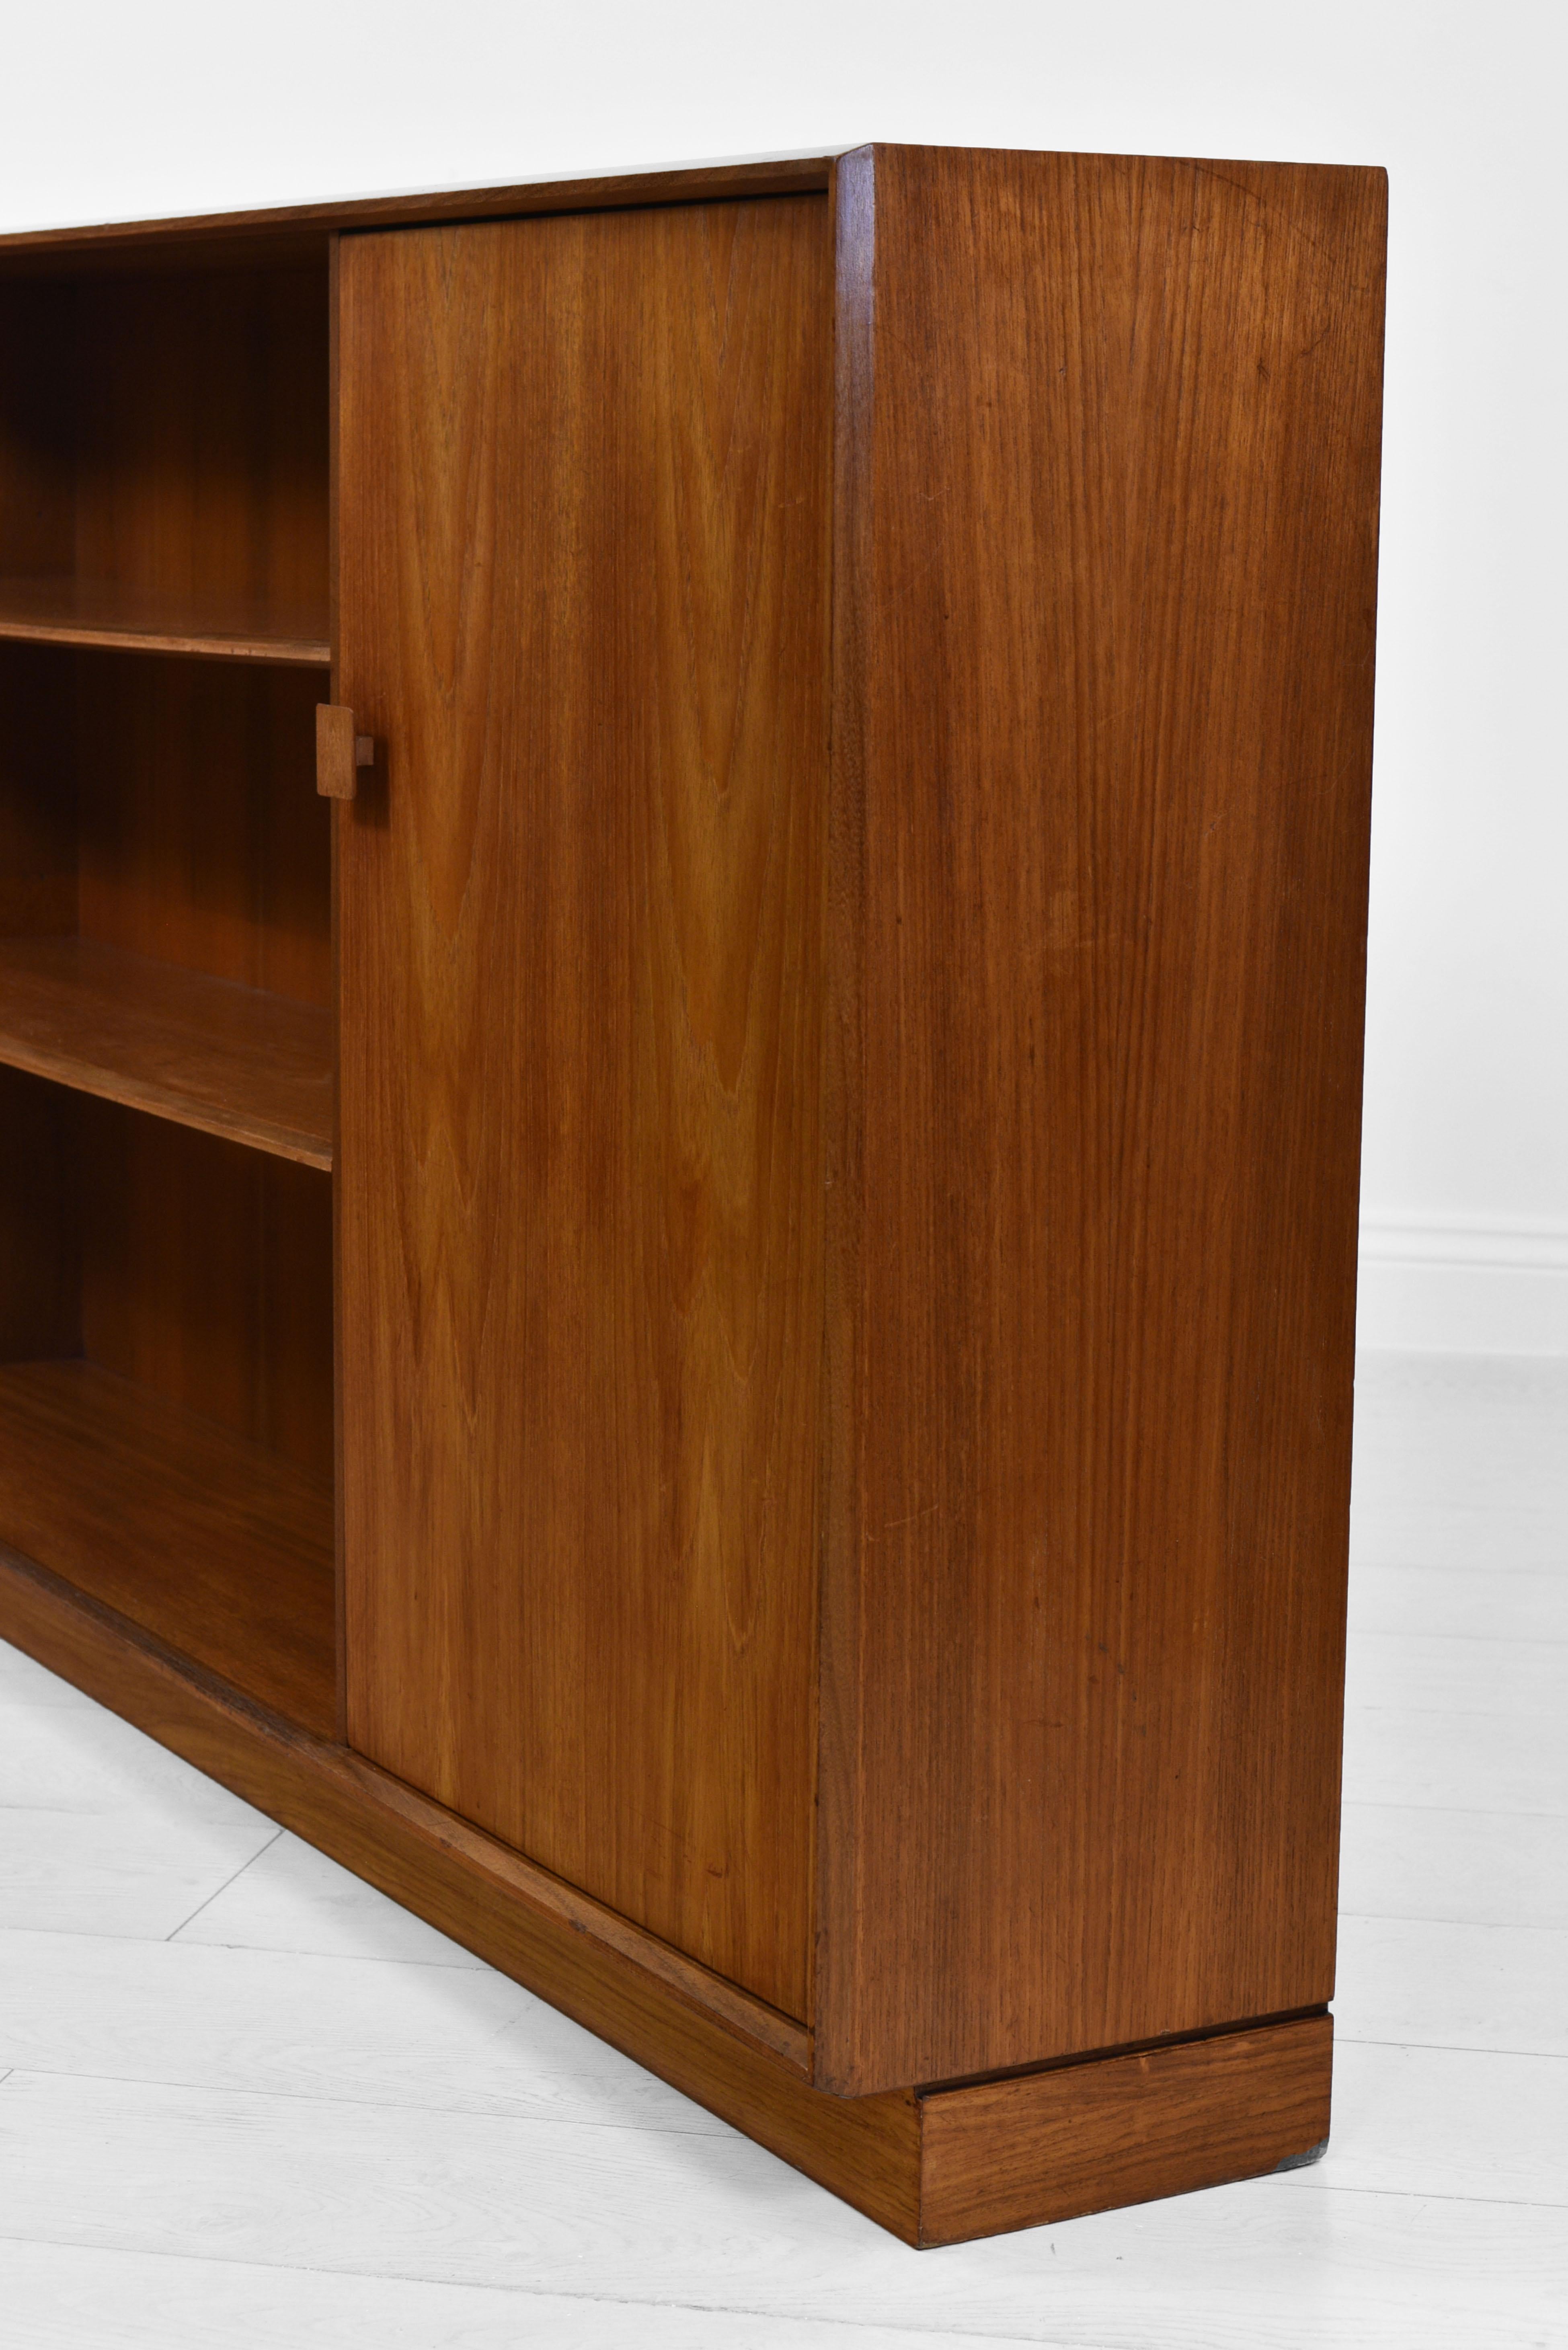 Ib Kofod Larsen Teak Open Low Bookcase Mid Century Danish Design For G PLan 1